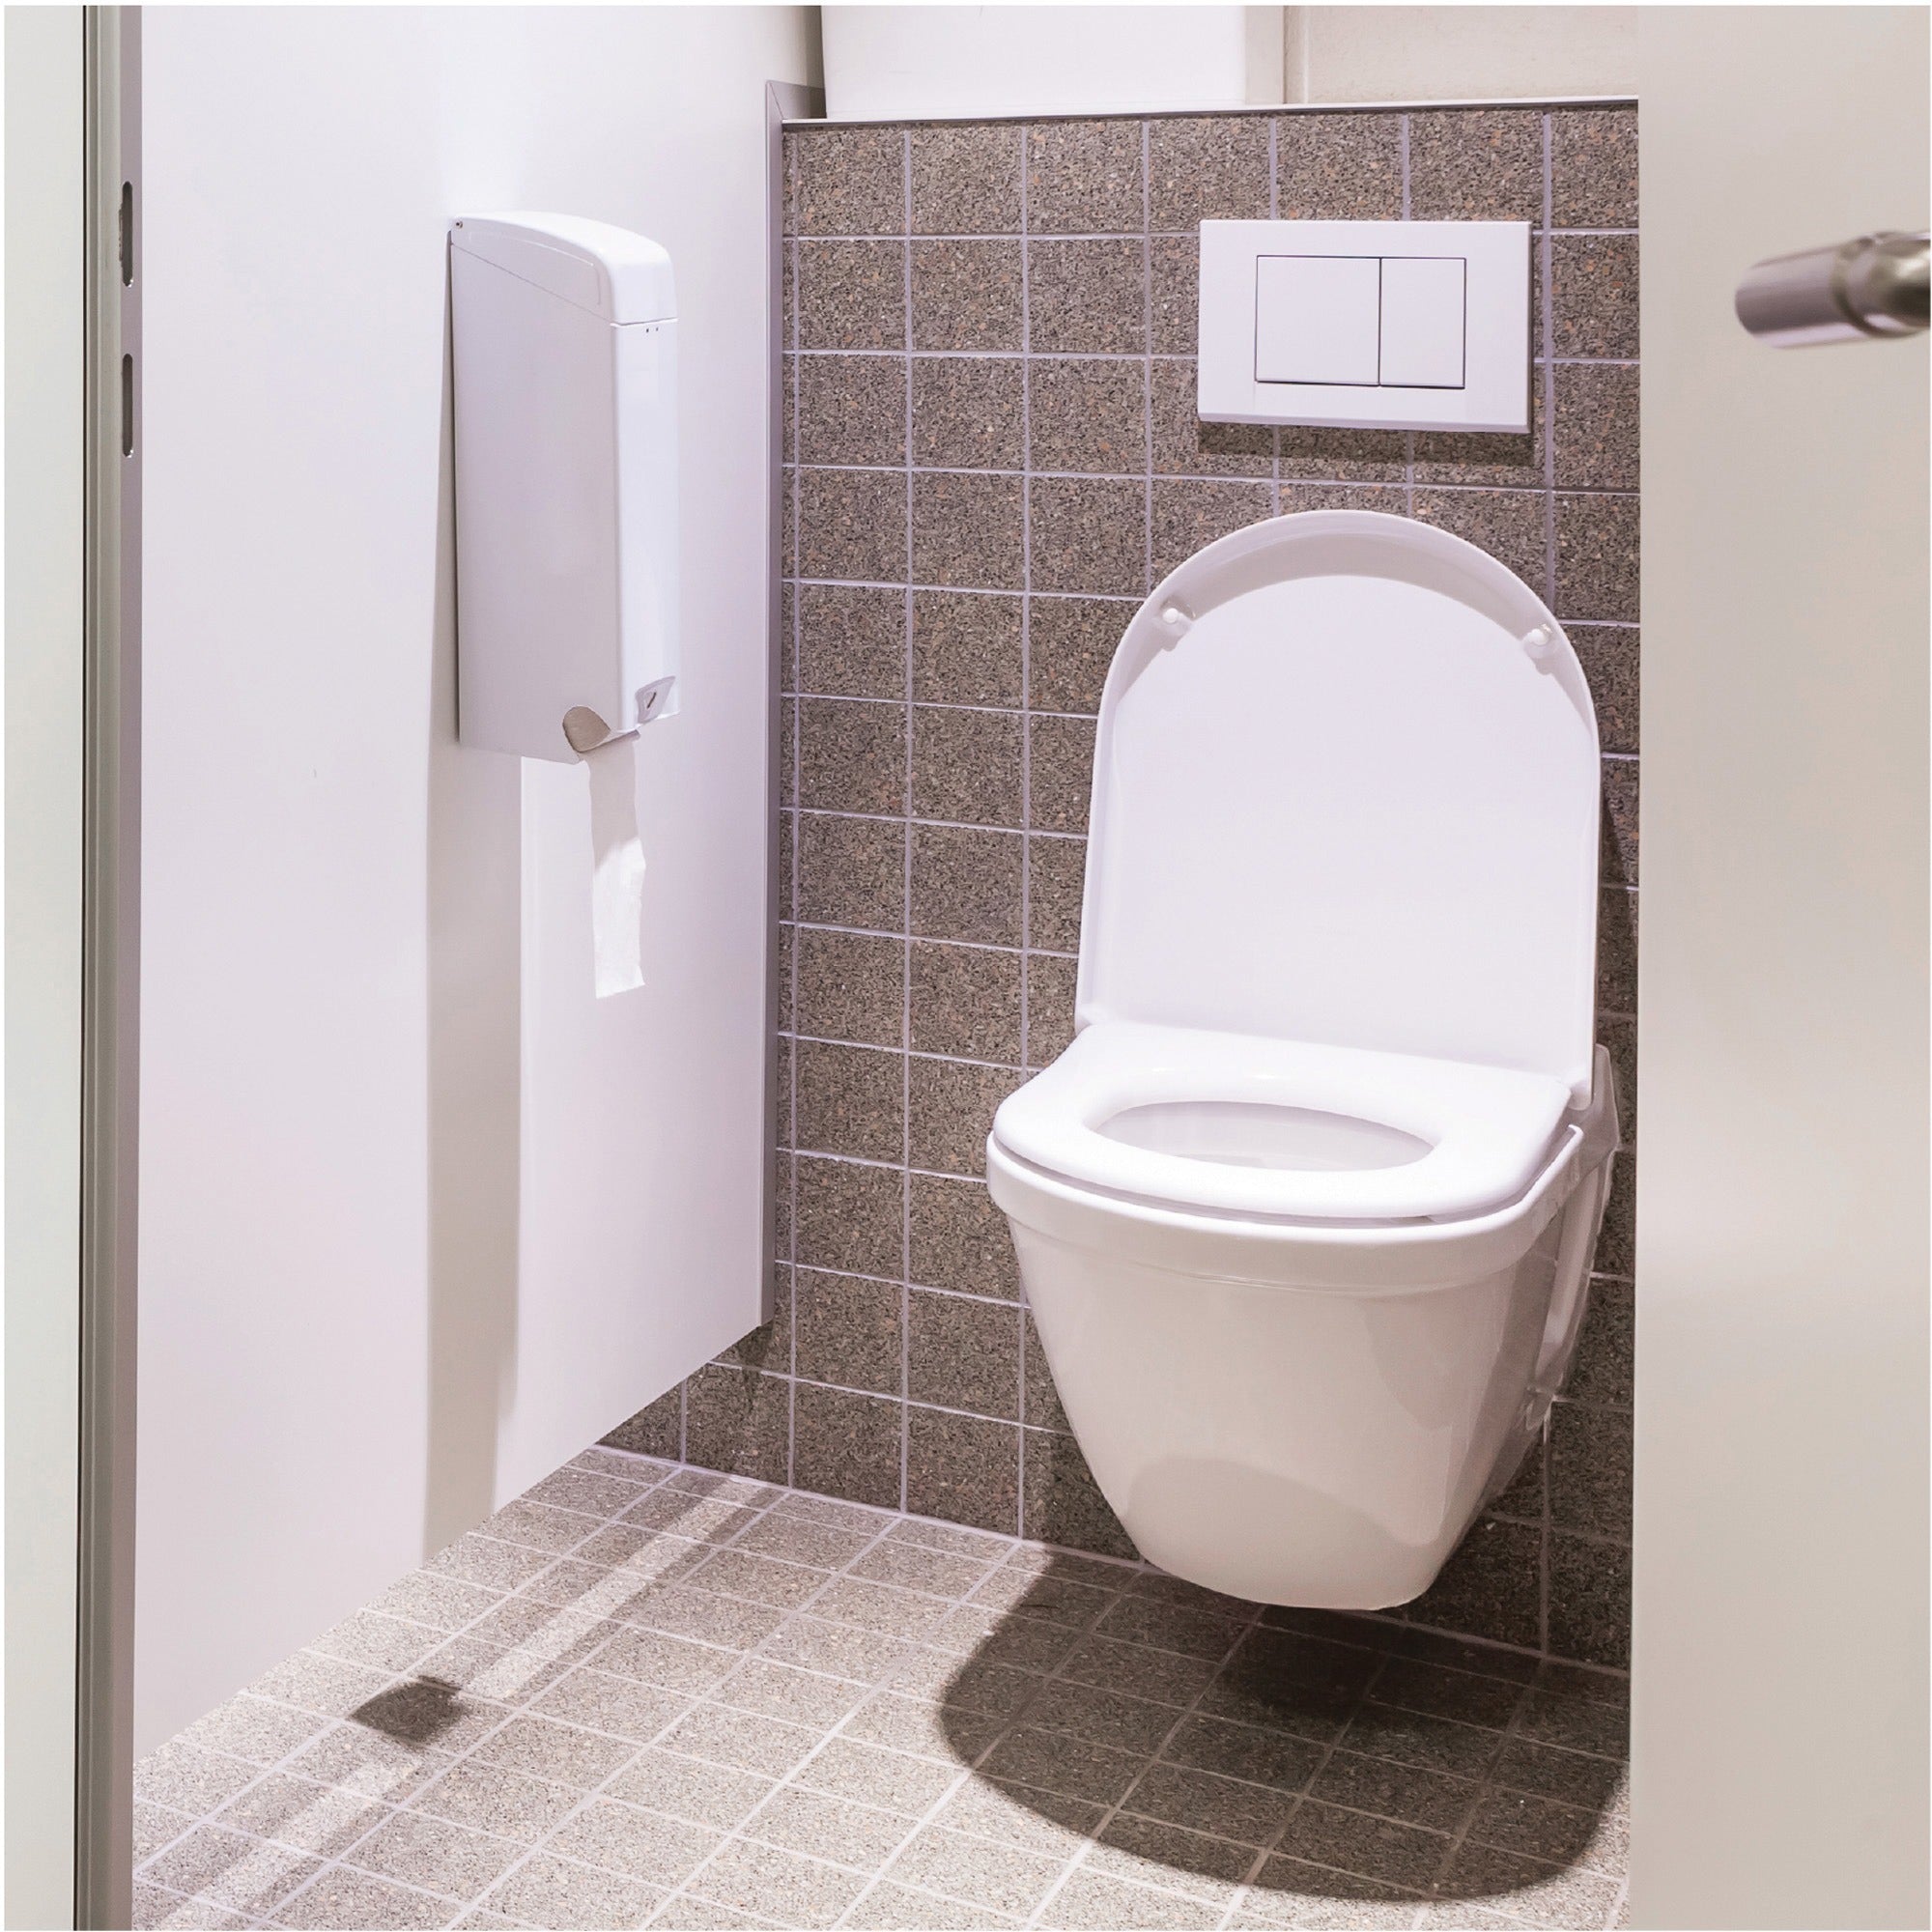 genuine-joe-solutions-double-capacity-bath-tissue-2-ply-1000-sheets-roll-071-core-white-virgin-fiber-embossed-chlorine-free-for-bathroom-36-carton_gjo91000 - 2